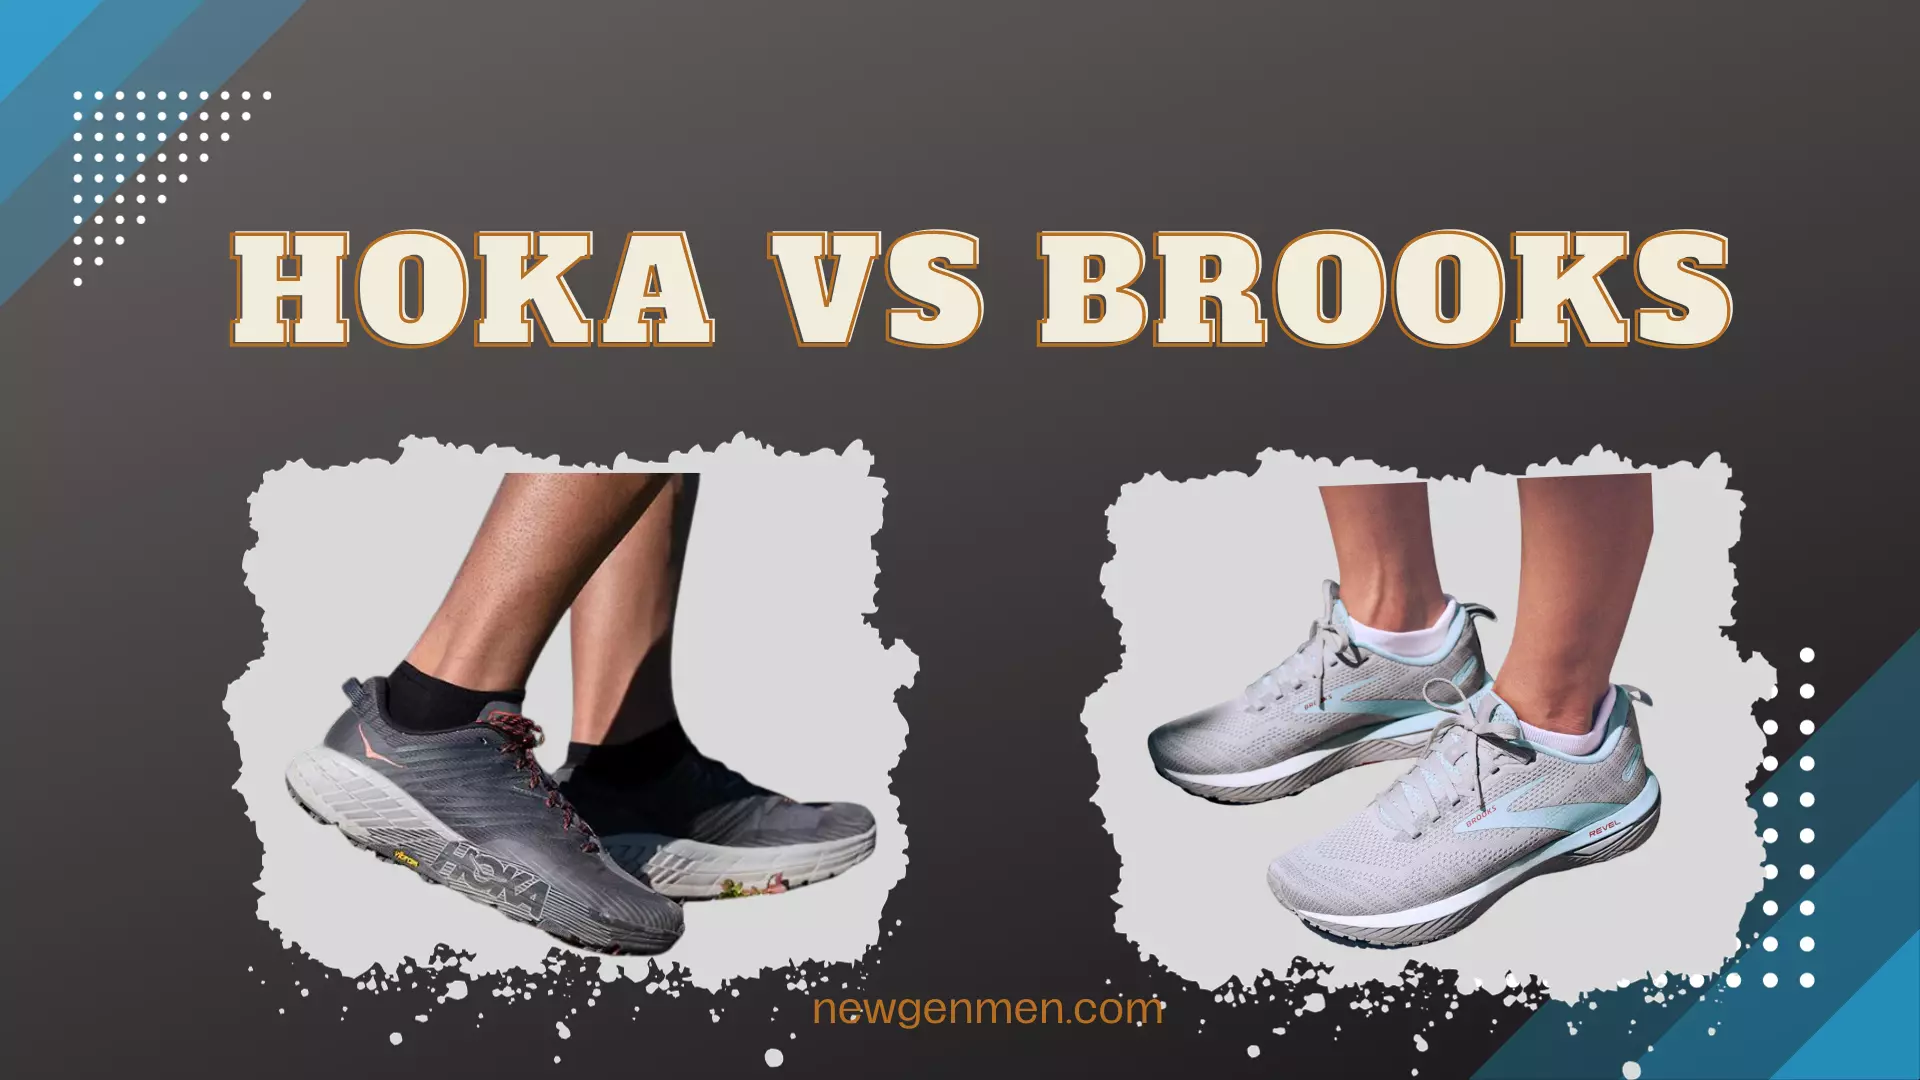 Hoka vs Brooks: The Battle Of High End Running Shoes